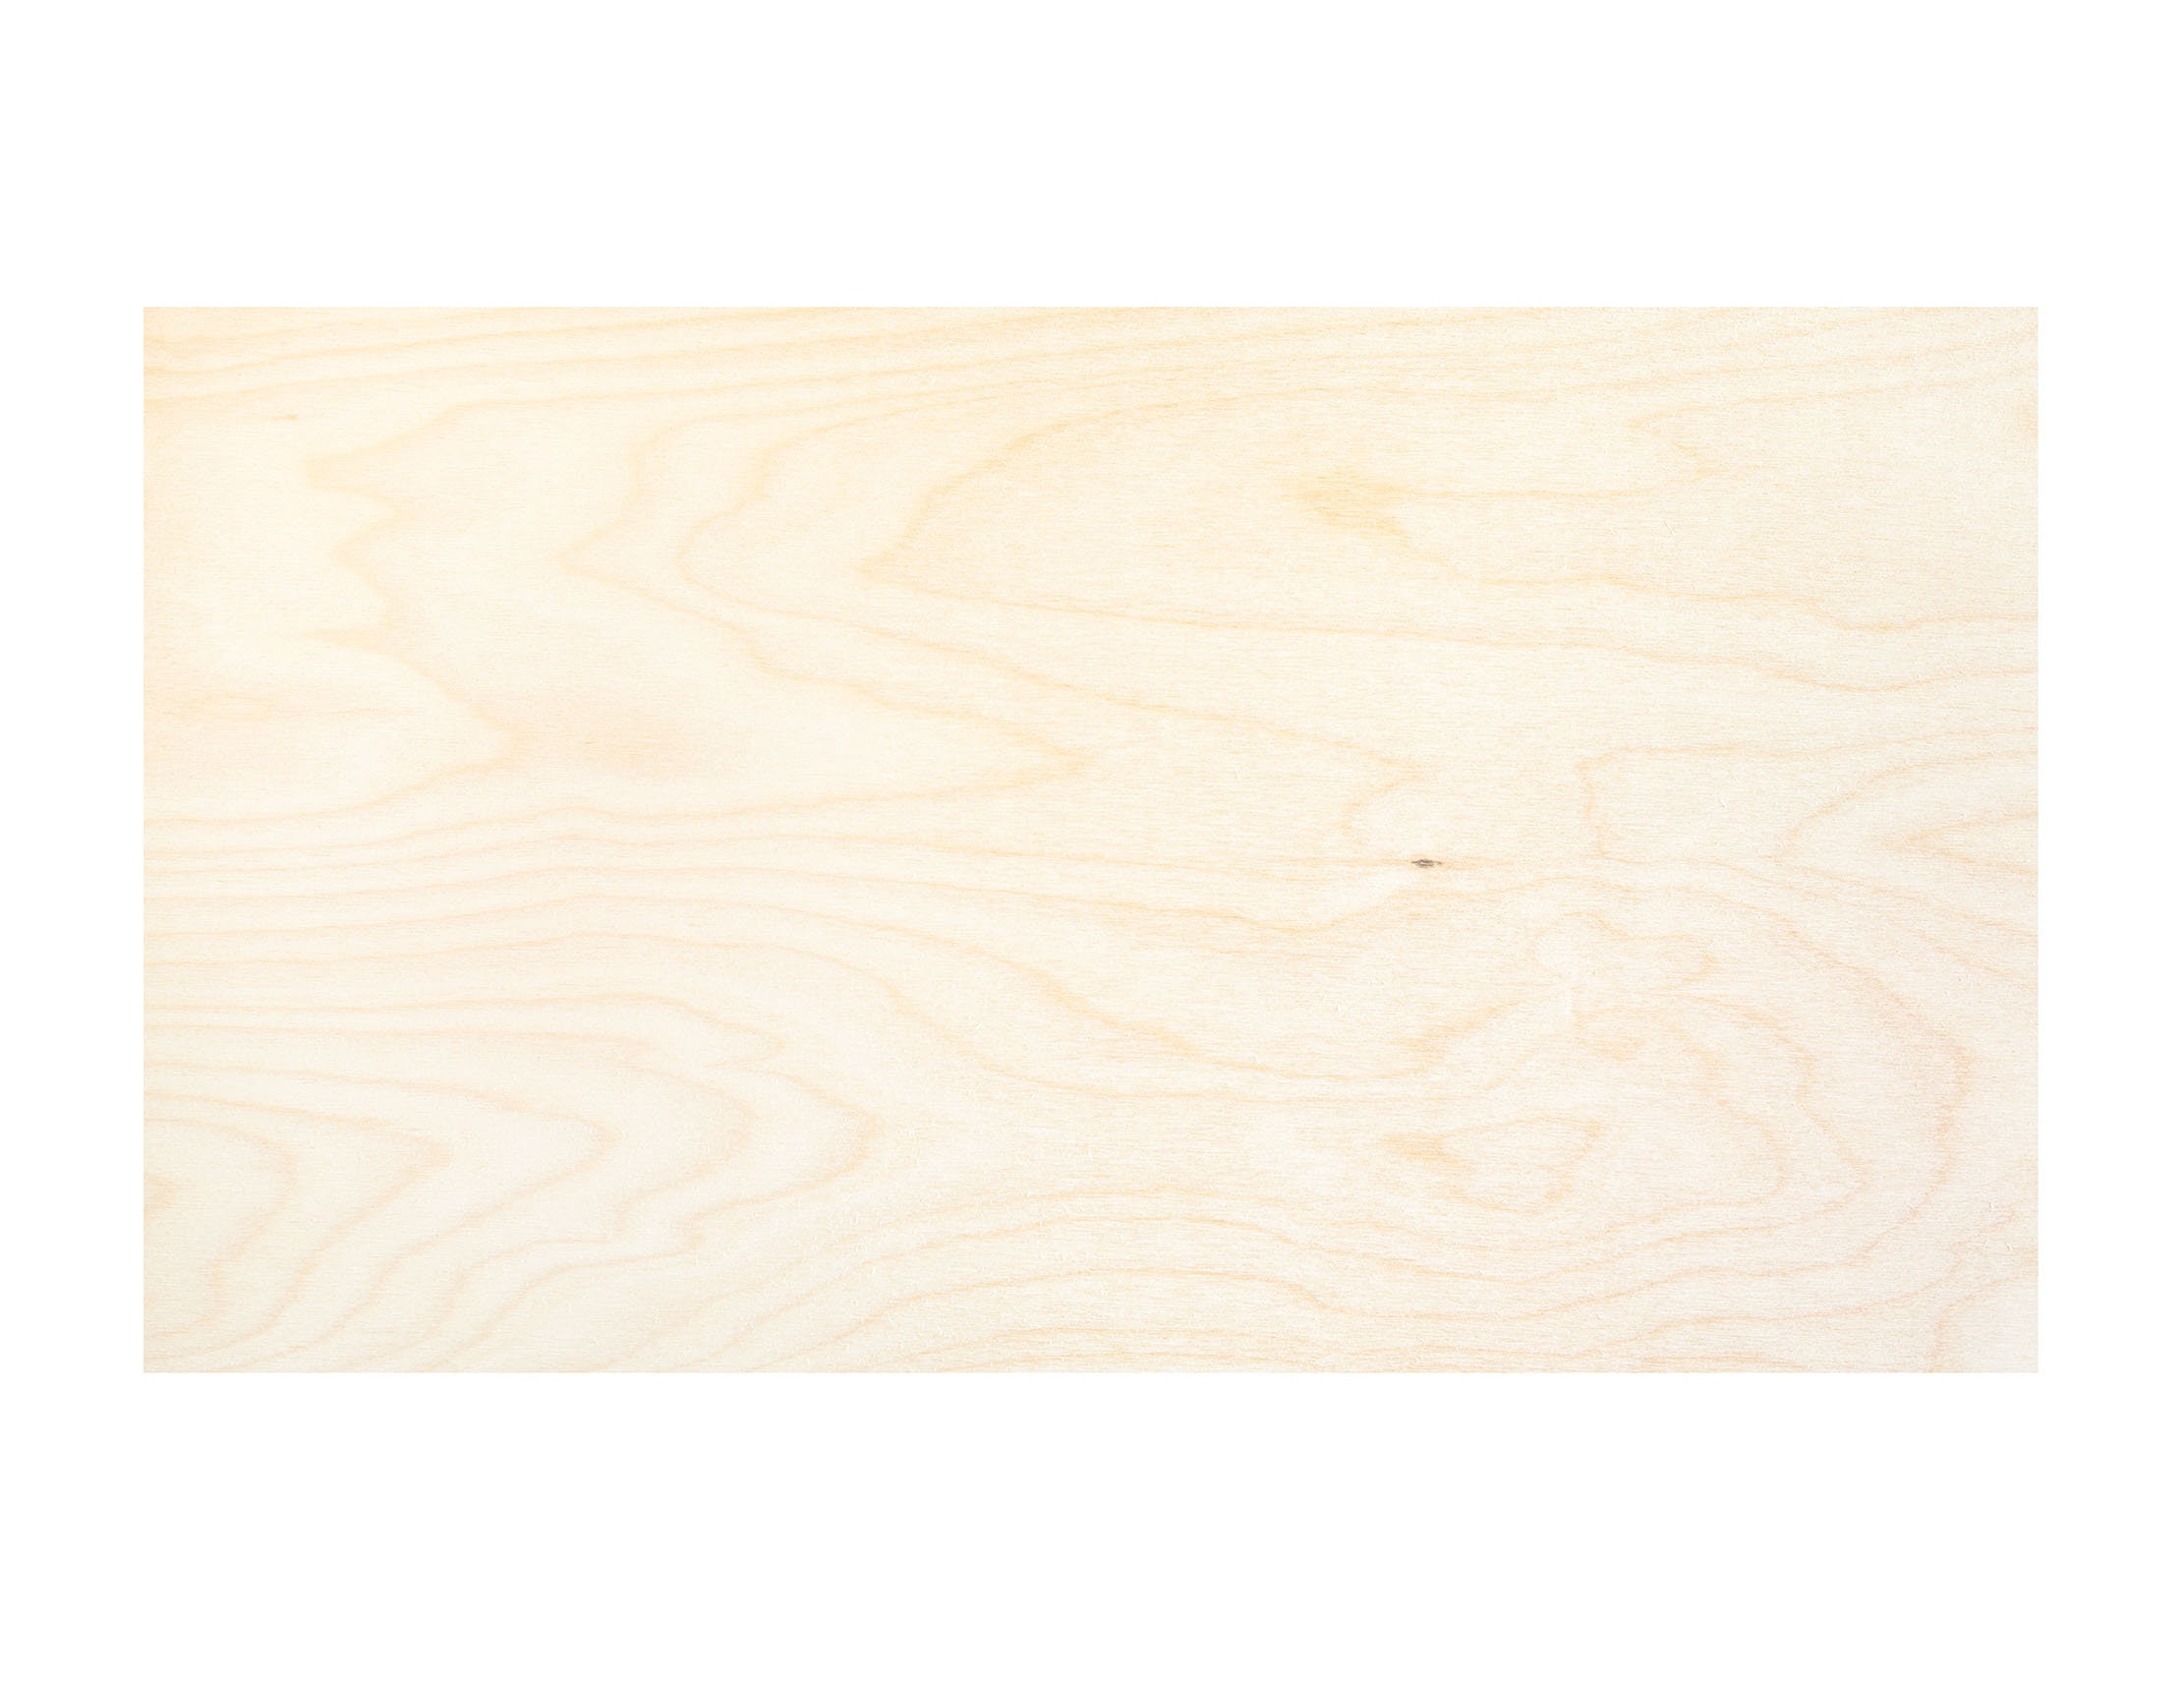 3 mm 1/8 X 12 X 20 Premium Baltic Birch Plywood – B/BB Grade - 20 Sheets  by Wood-Ever